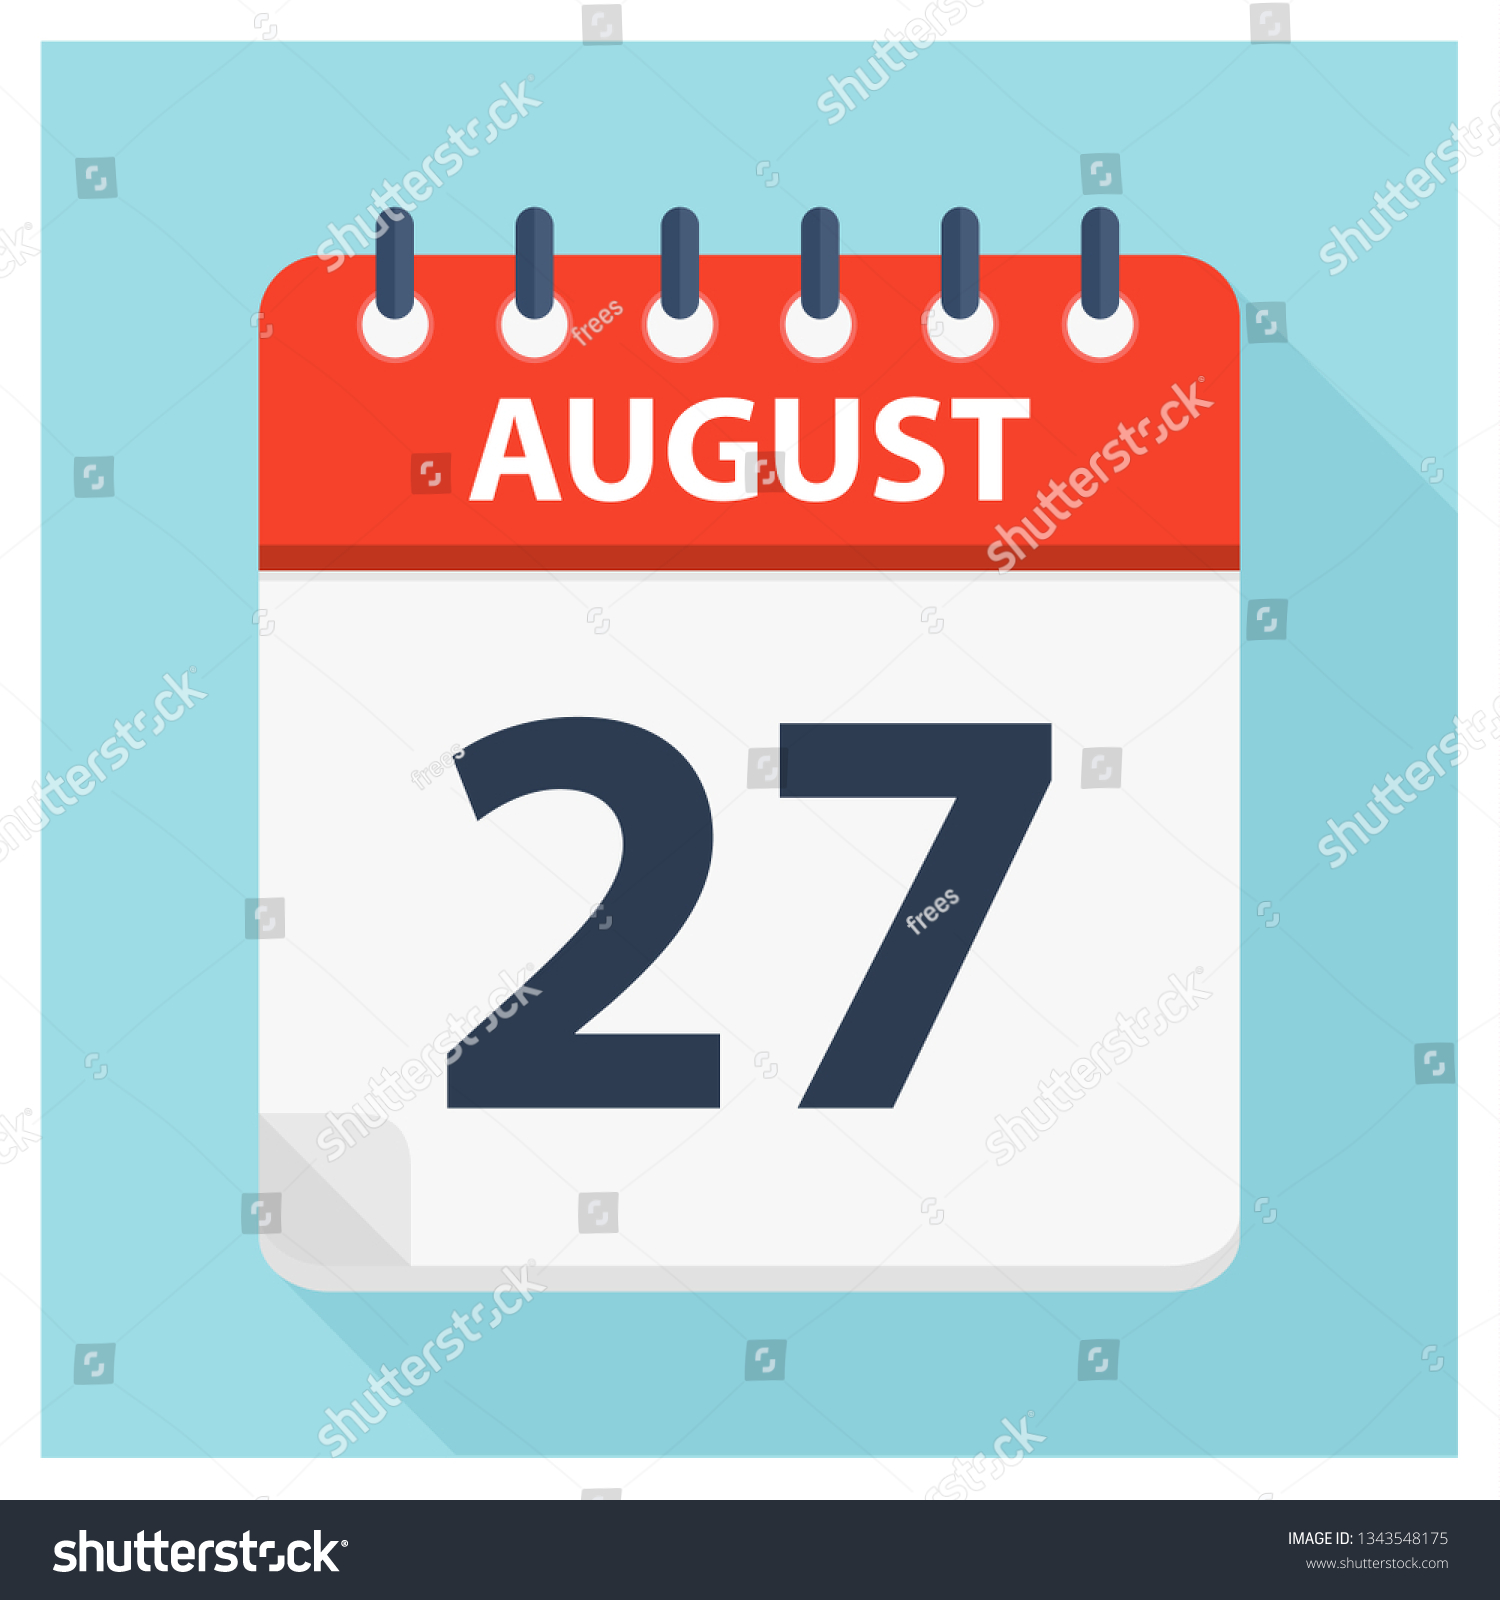 SVG of August 27 -  Calendar Icon - Calendar design template - Business vector illustration. svg